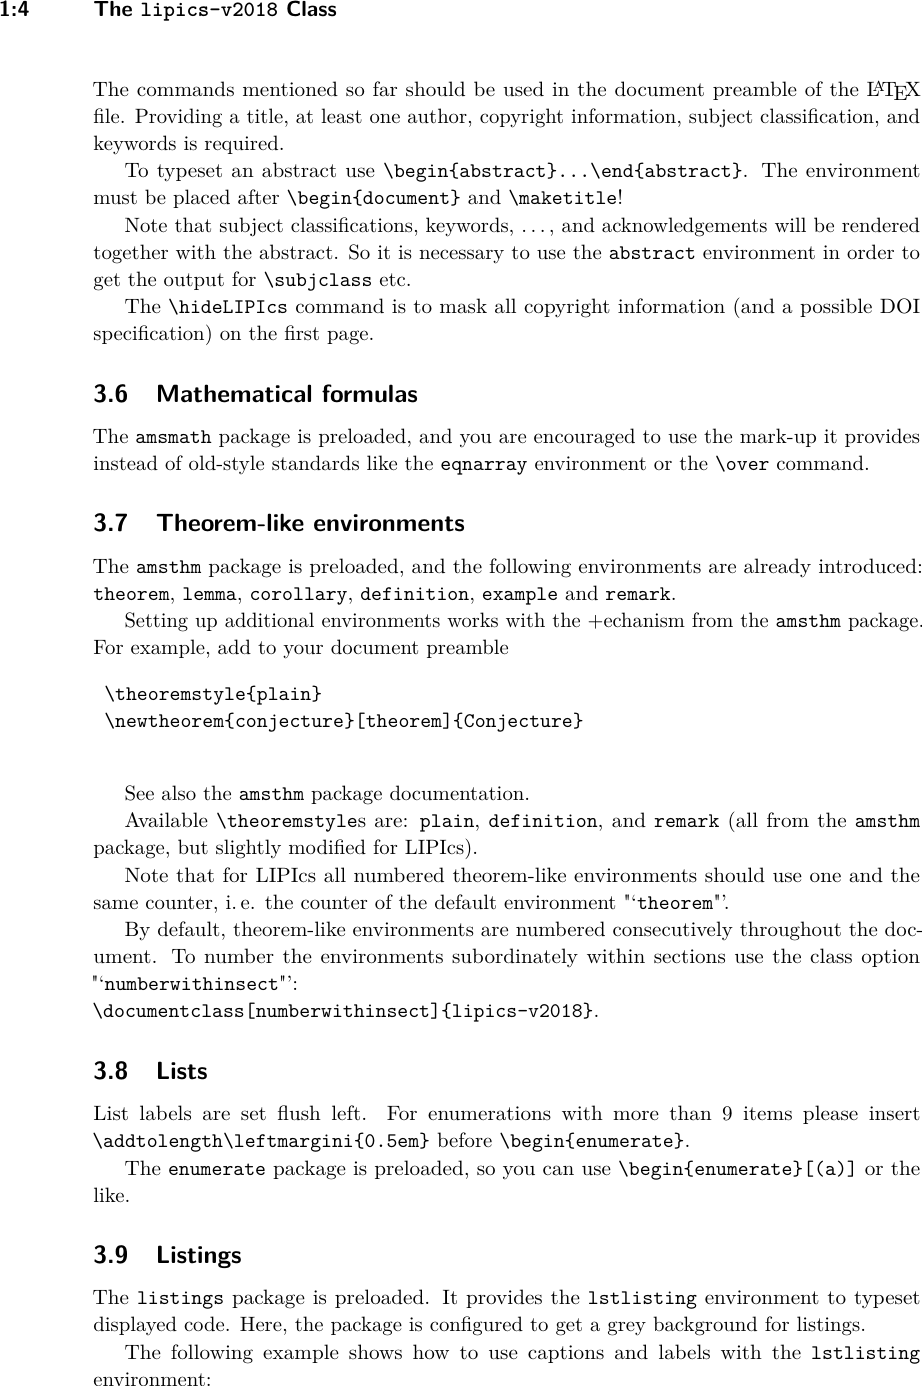 Page 4 of 8 - Lipics-v2018-manual